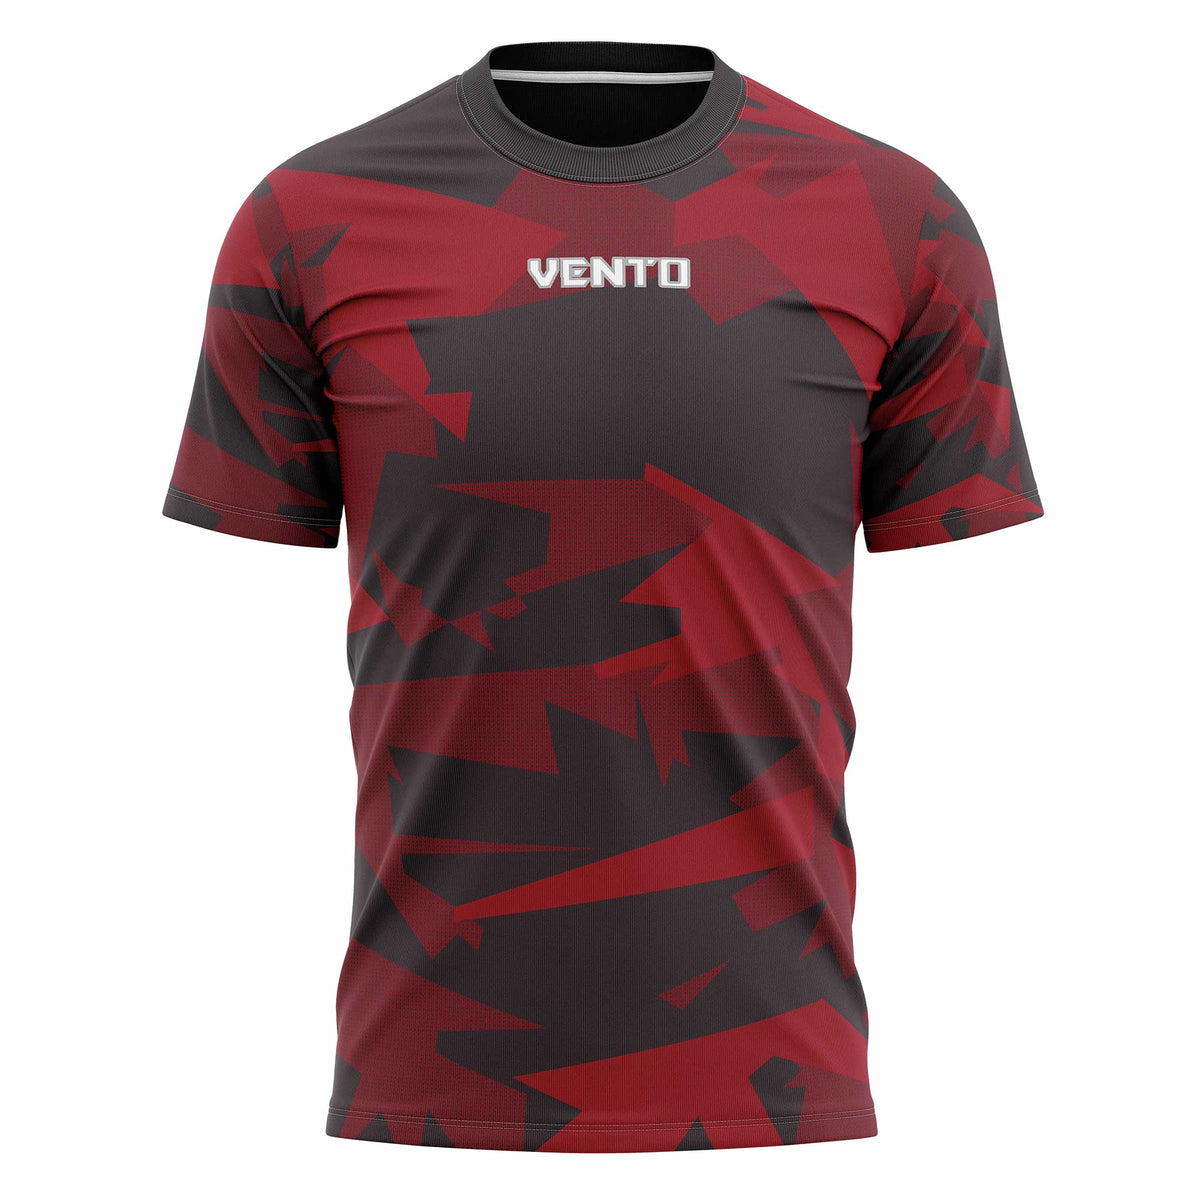 Vento Laceration MMA/Boxing T-Shirt